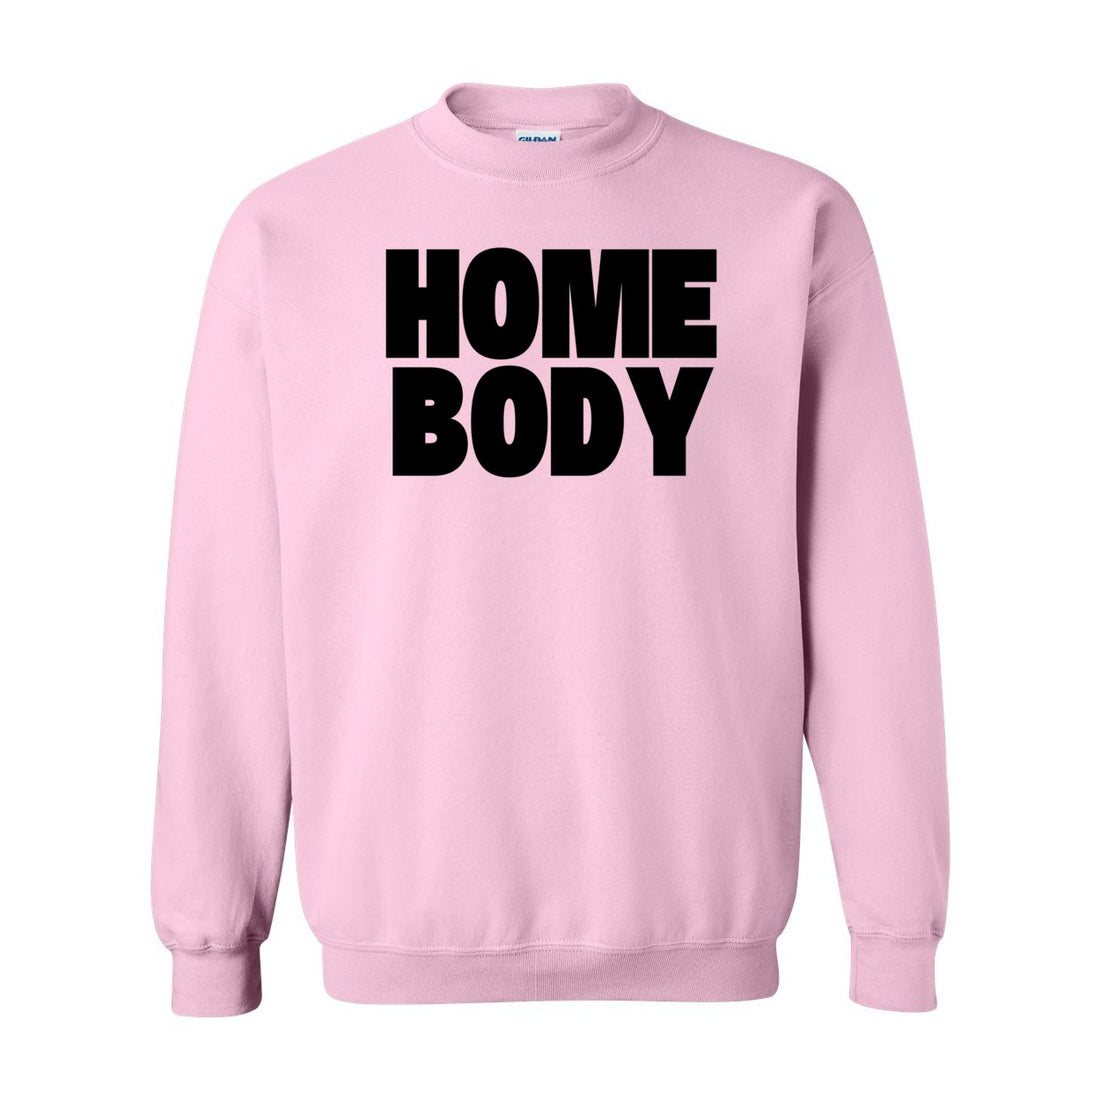 Home Body Crewneck Sweatshirt - Sweaters/Hoodies - Positively Sassy - Home Body Crewneck Sweatshirt